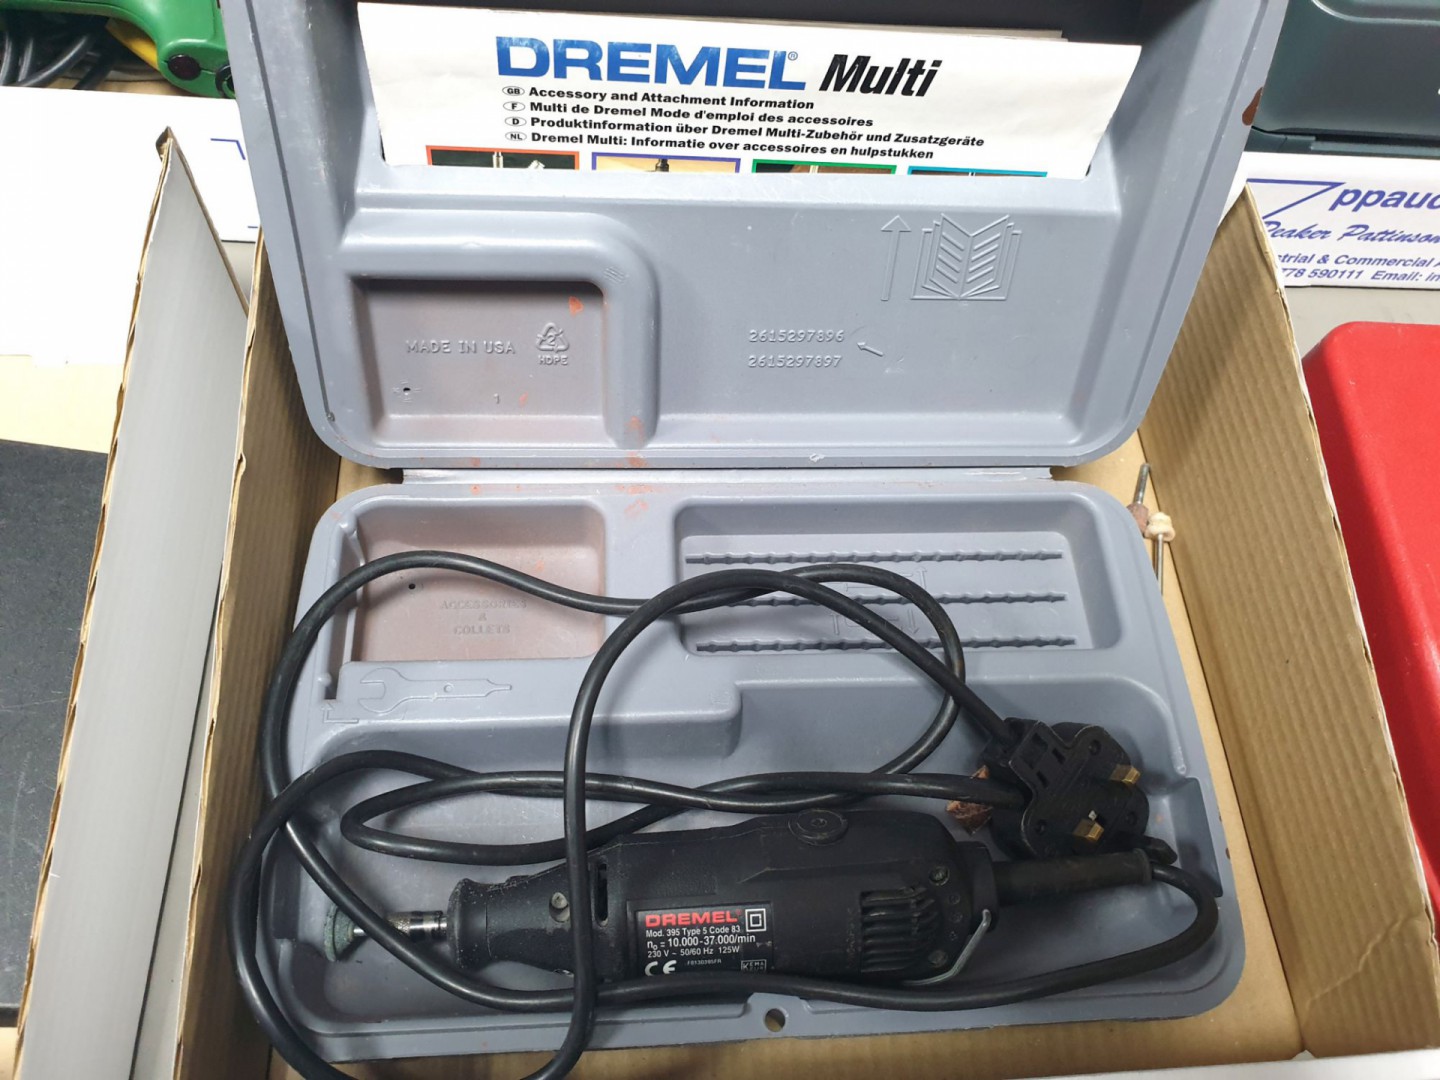 Dremel 395 multi tool in case